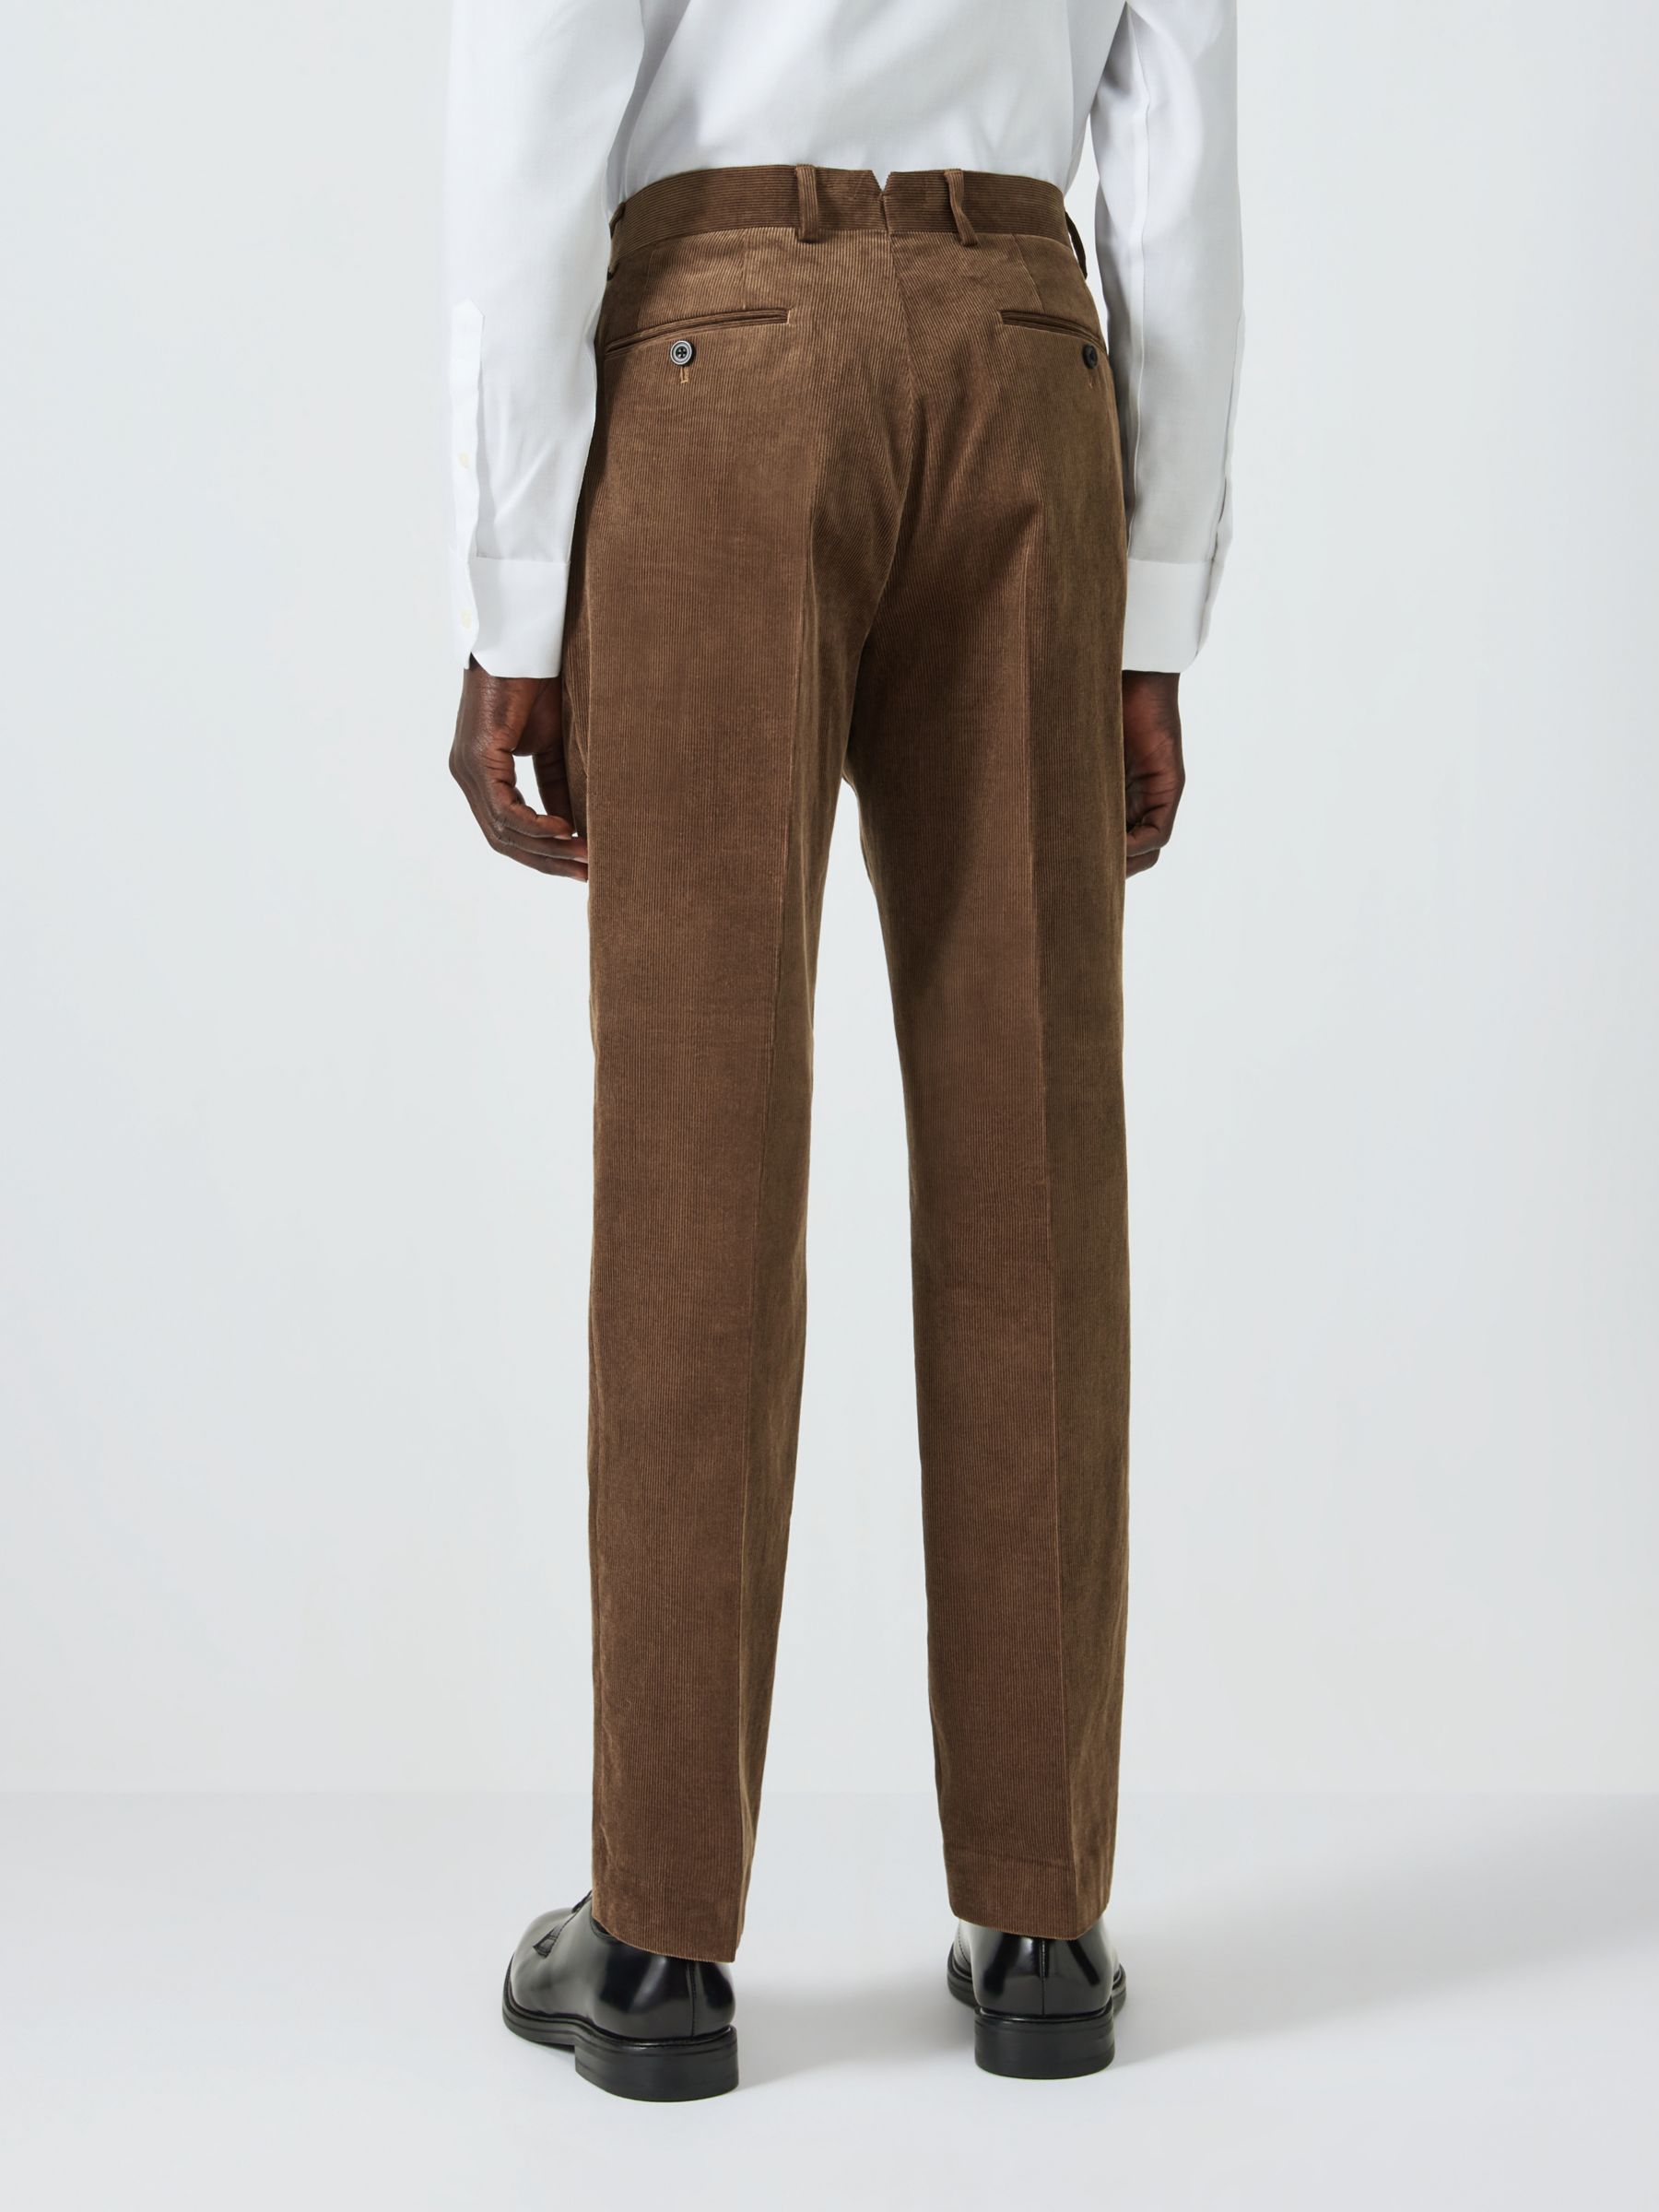 John Lewis Corduroy Regular Fit Trousers, Taupe, 40L